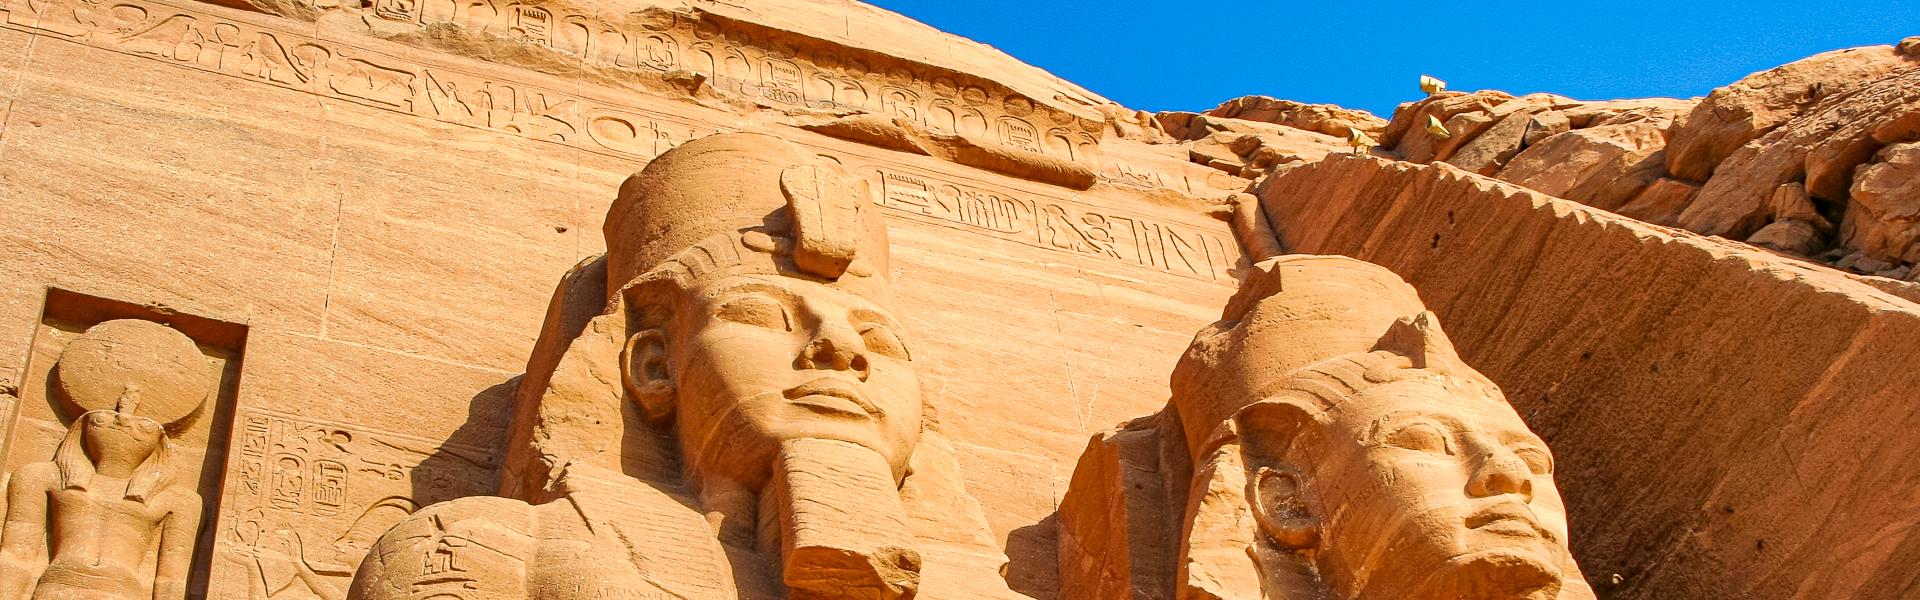 Gro?er Tempel von Abu Simbel |  auntmasako, Pixabay / Chamleon